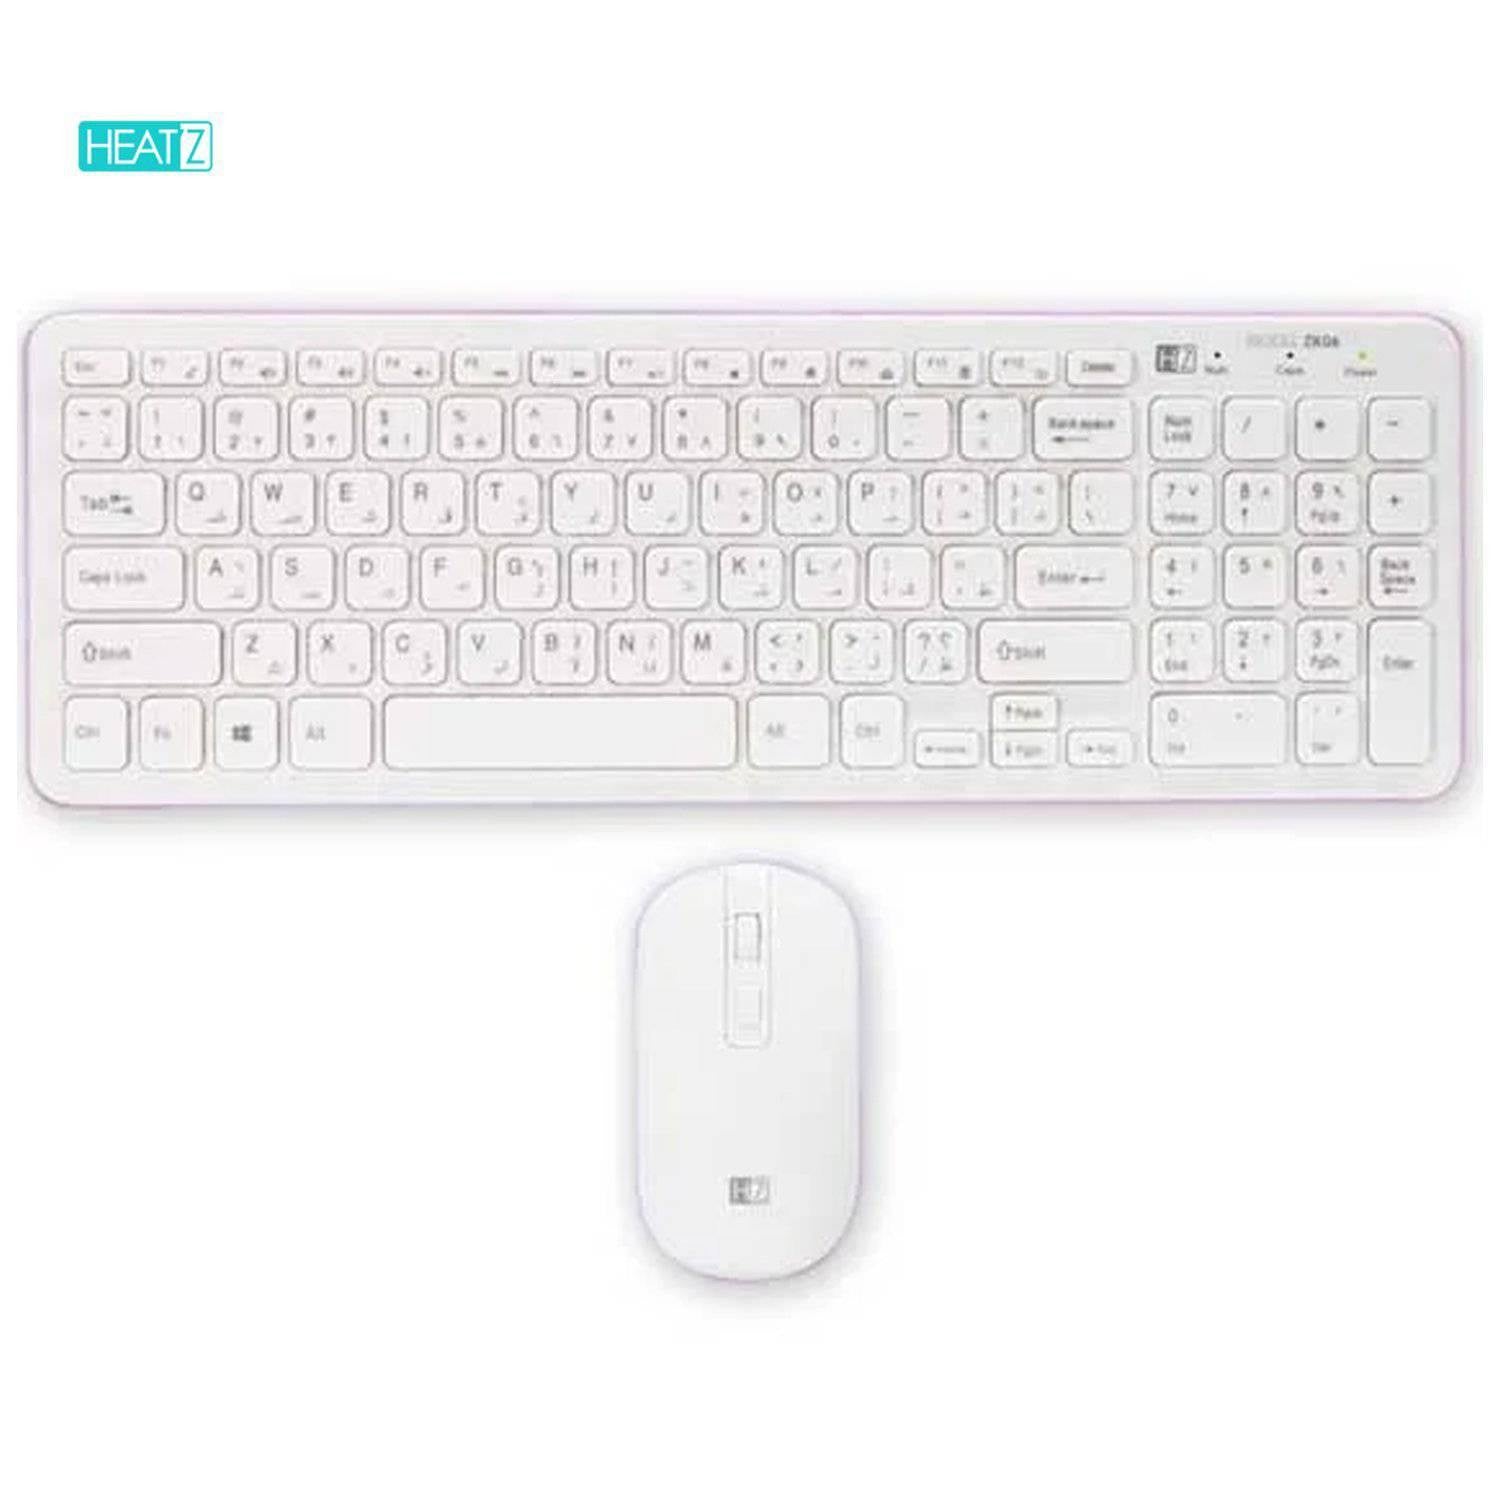 HeatZ ZK06 Arabic English Wireless Keyboard + Mouse | Shopna Online Store .